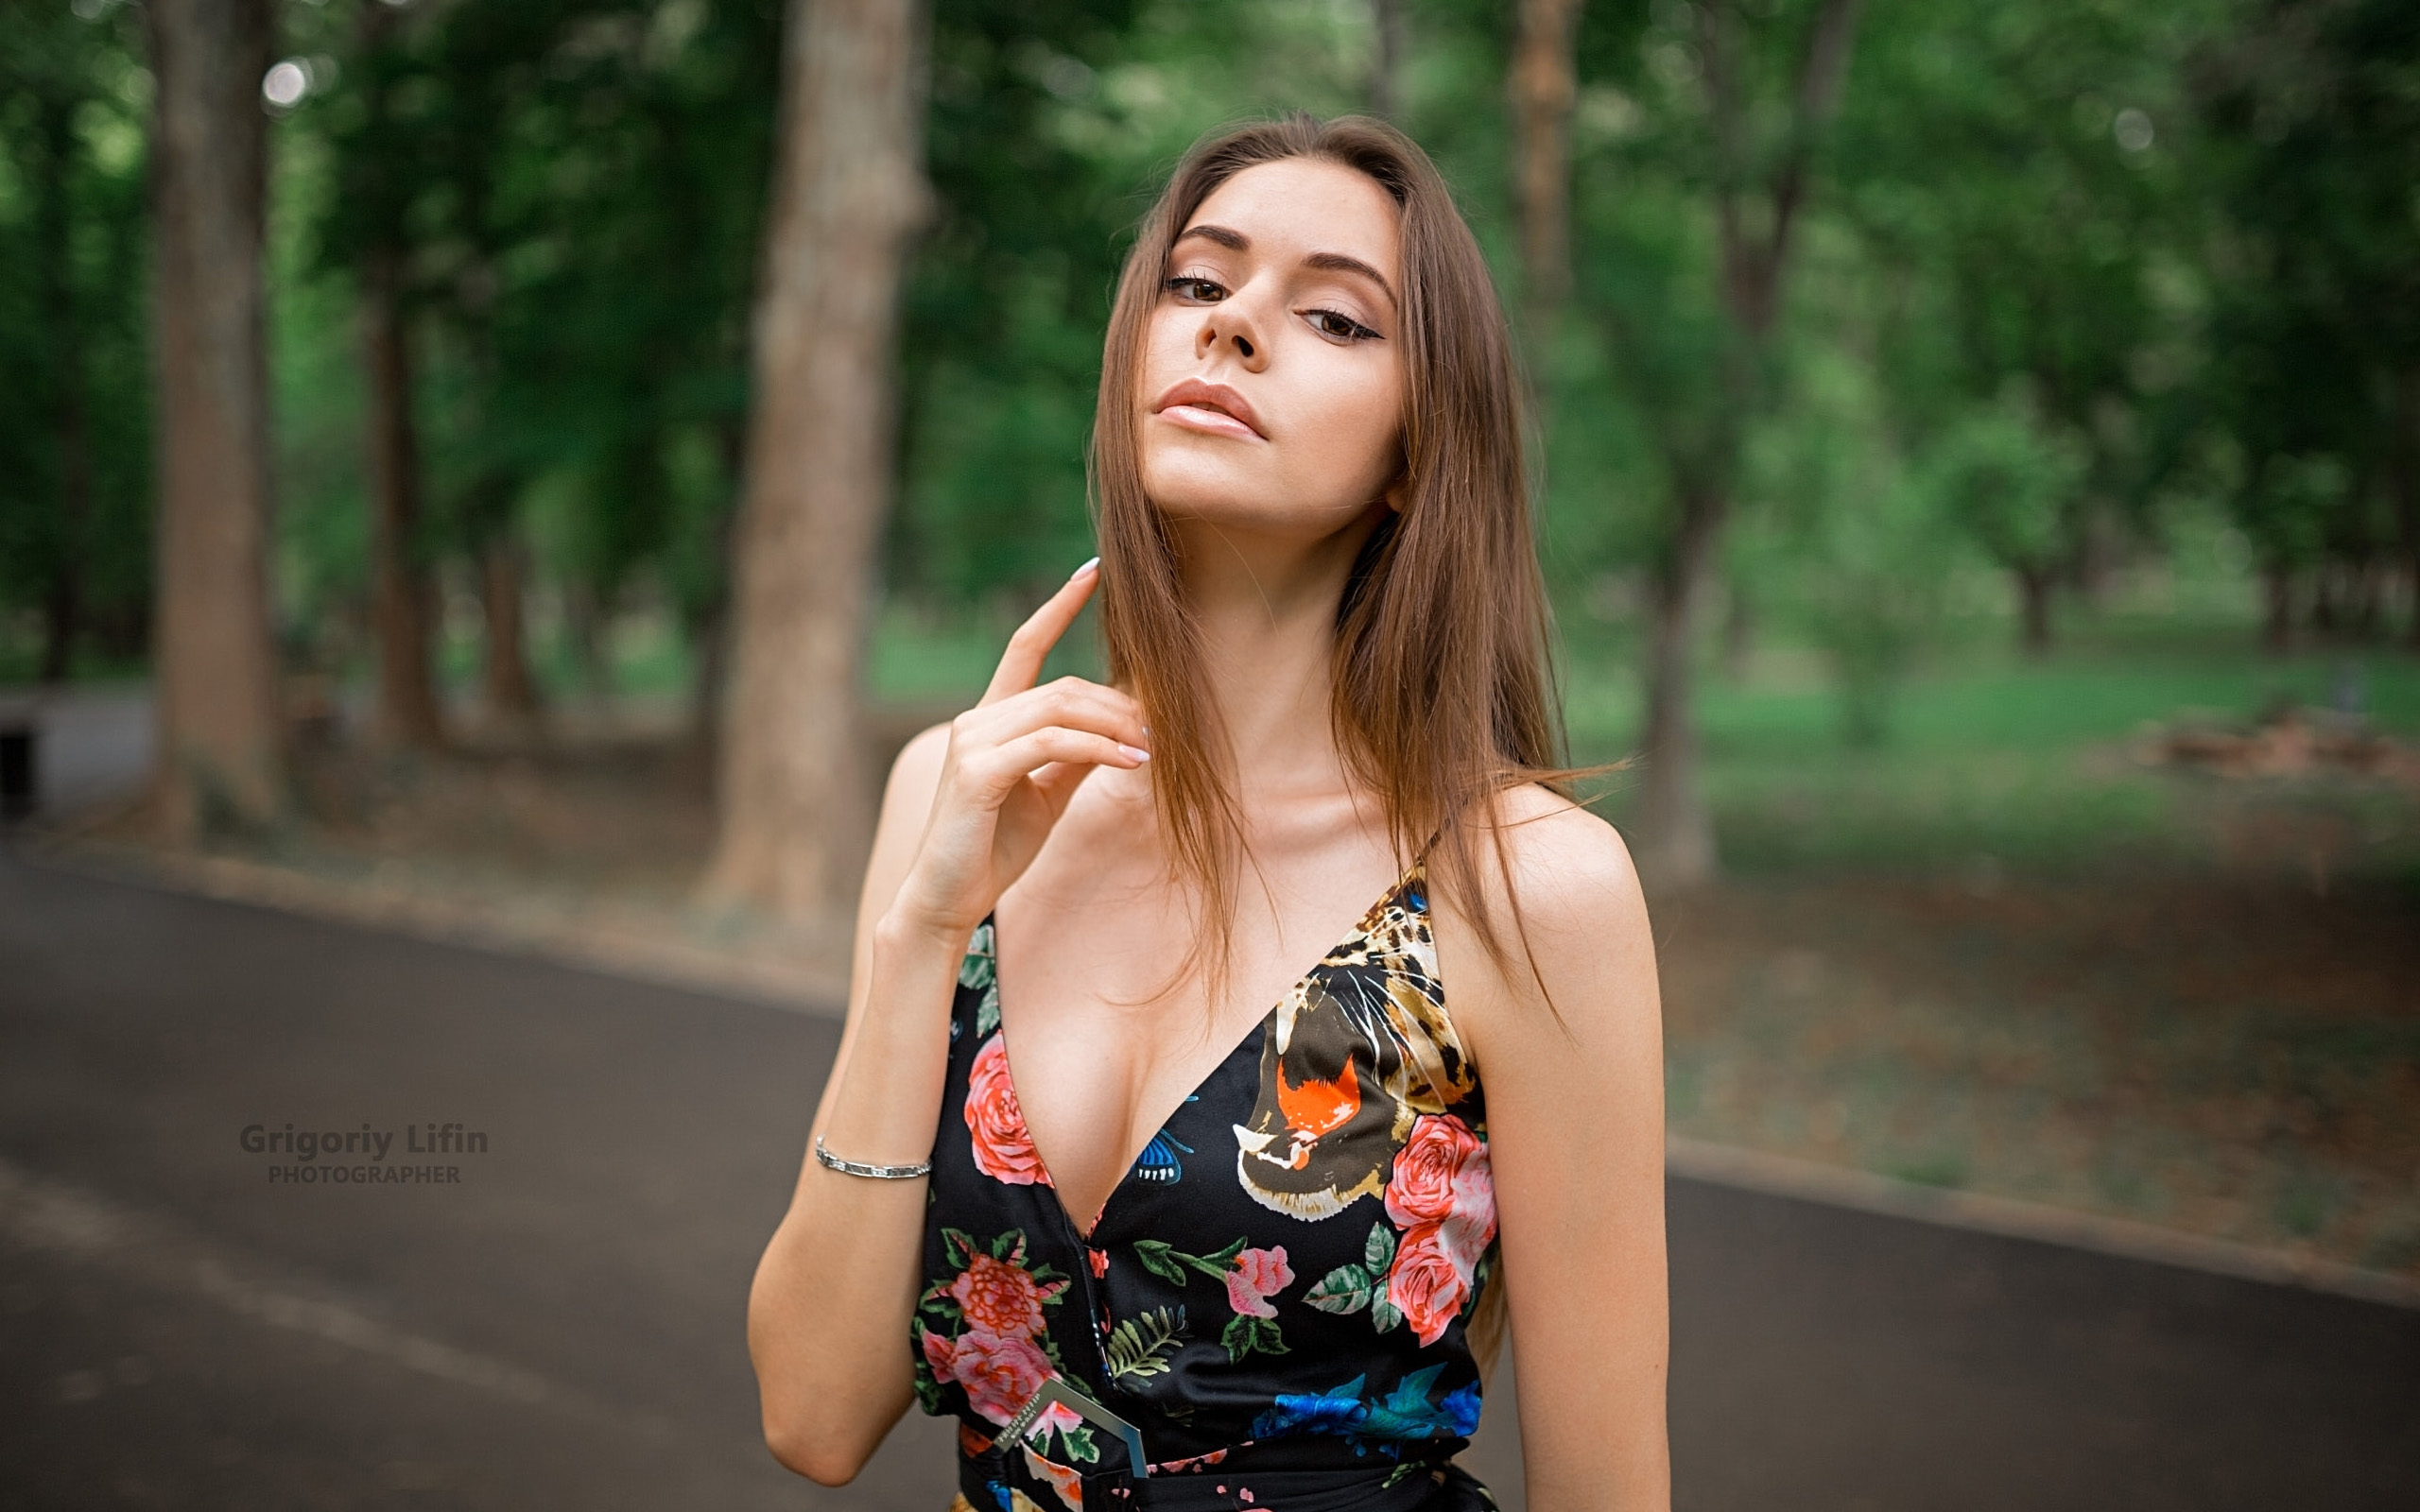 Women Grigoriy Lifin Eyeliner Trees Portrait Women Outdoors 2560x1600